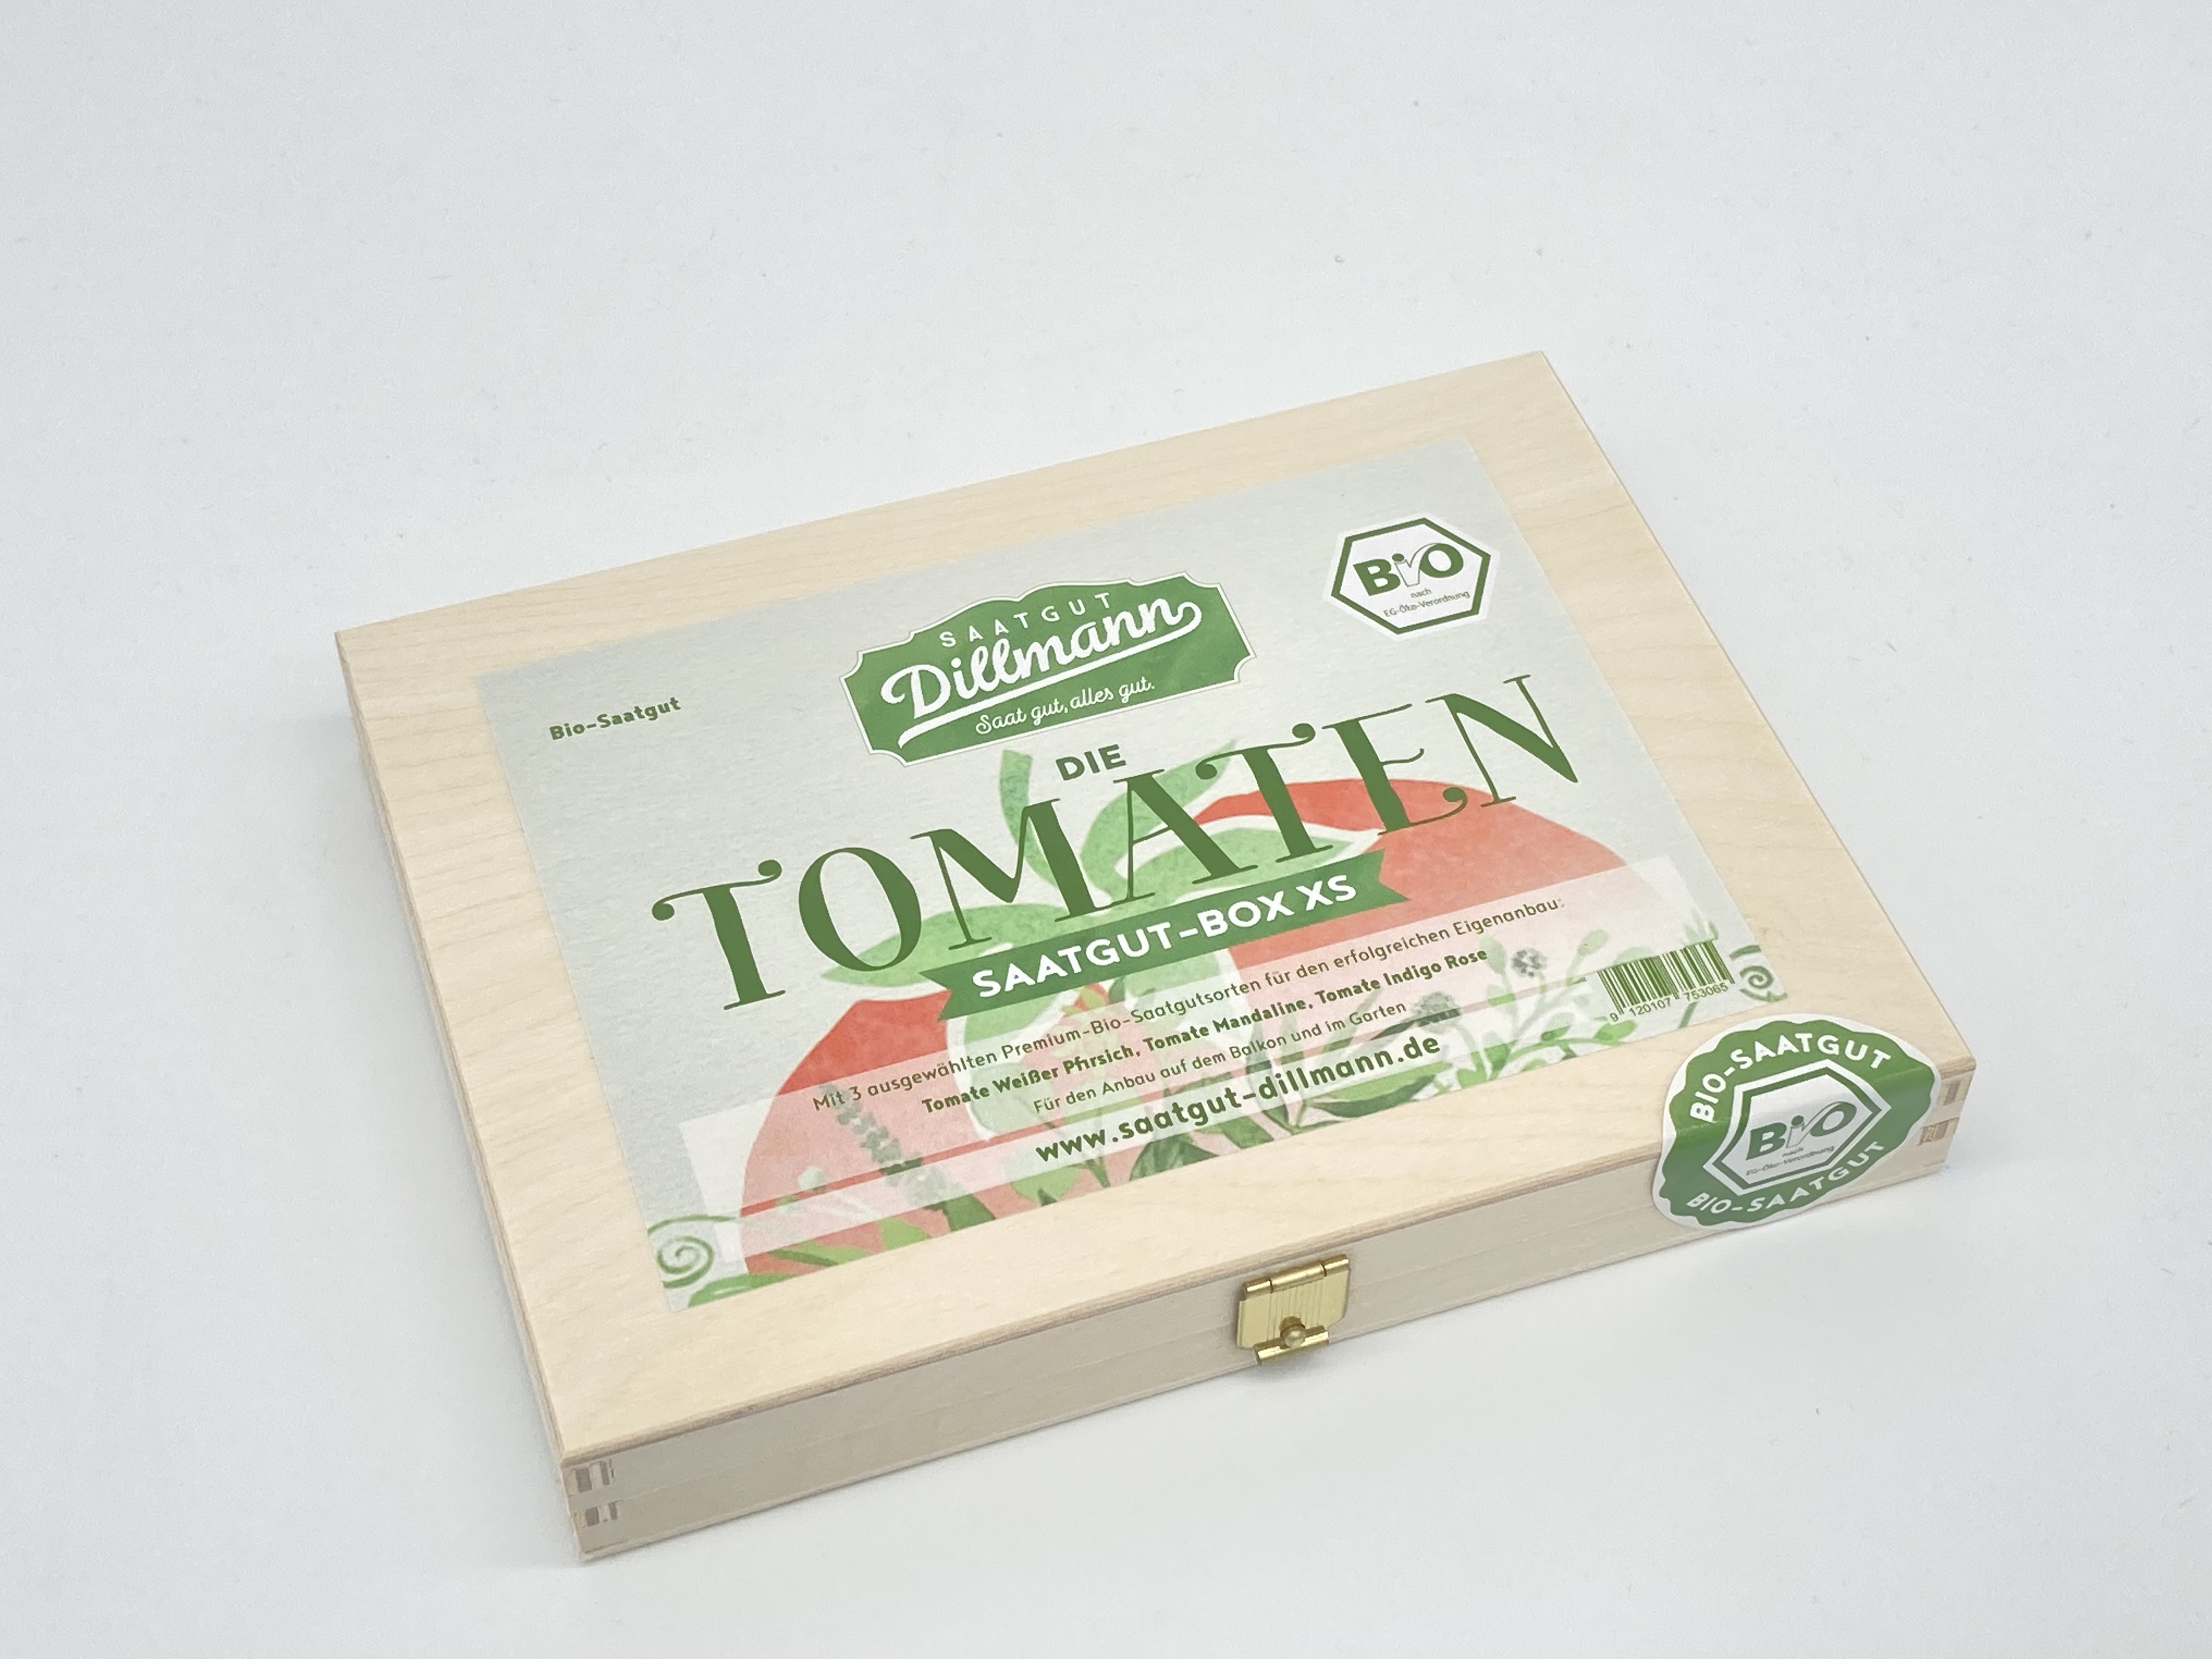 Tomaten-Raritäten Saatgut-Box XS Bio (Holzbox mit Klappdeckel)